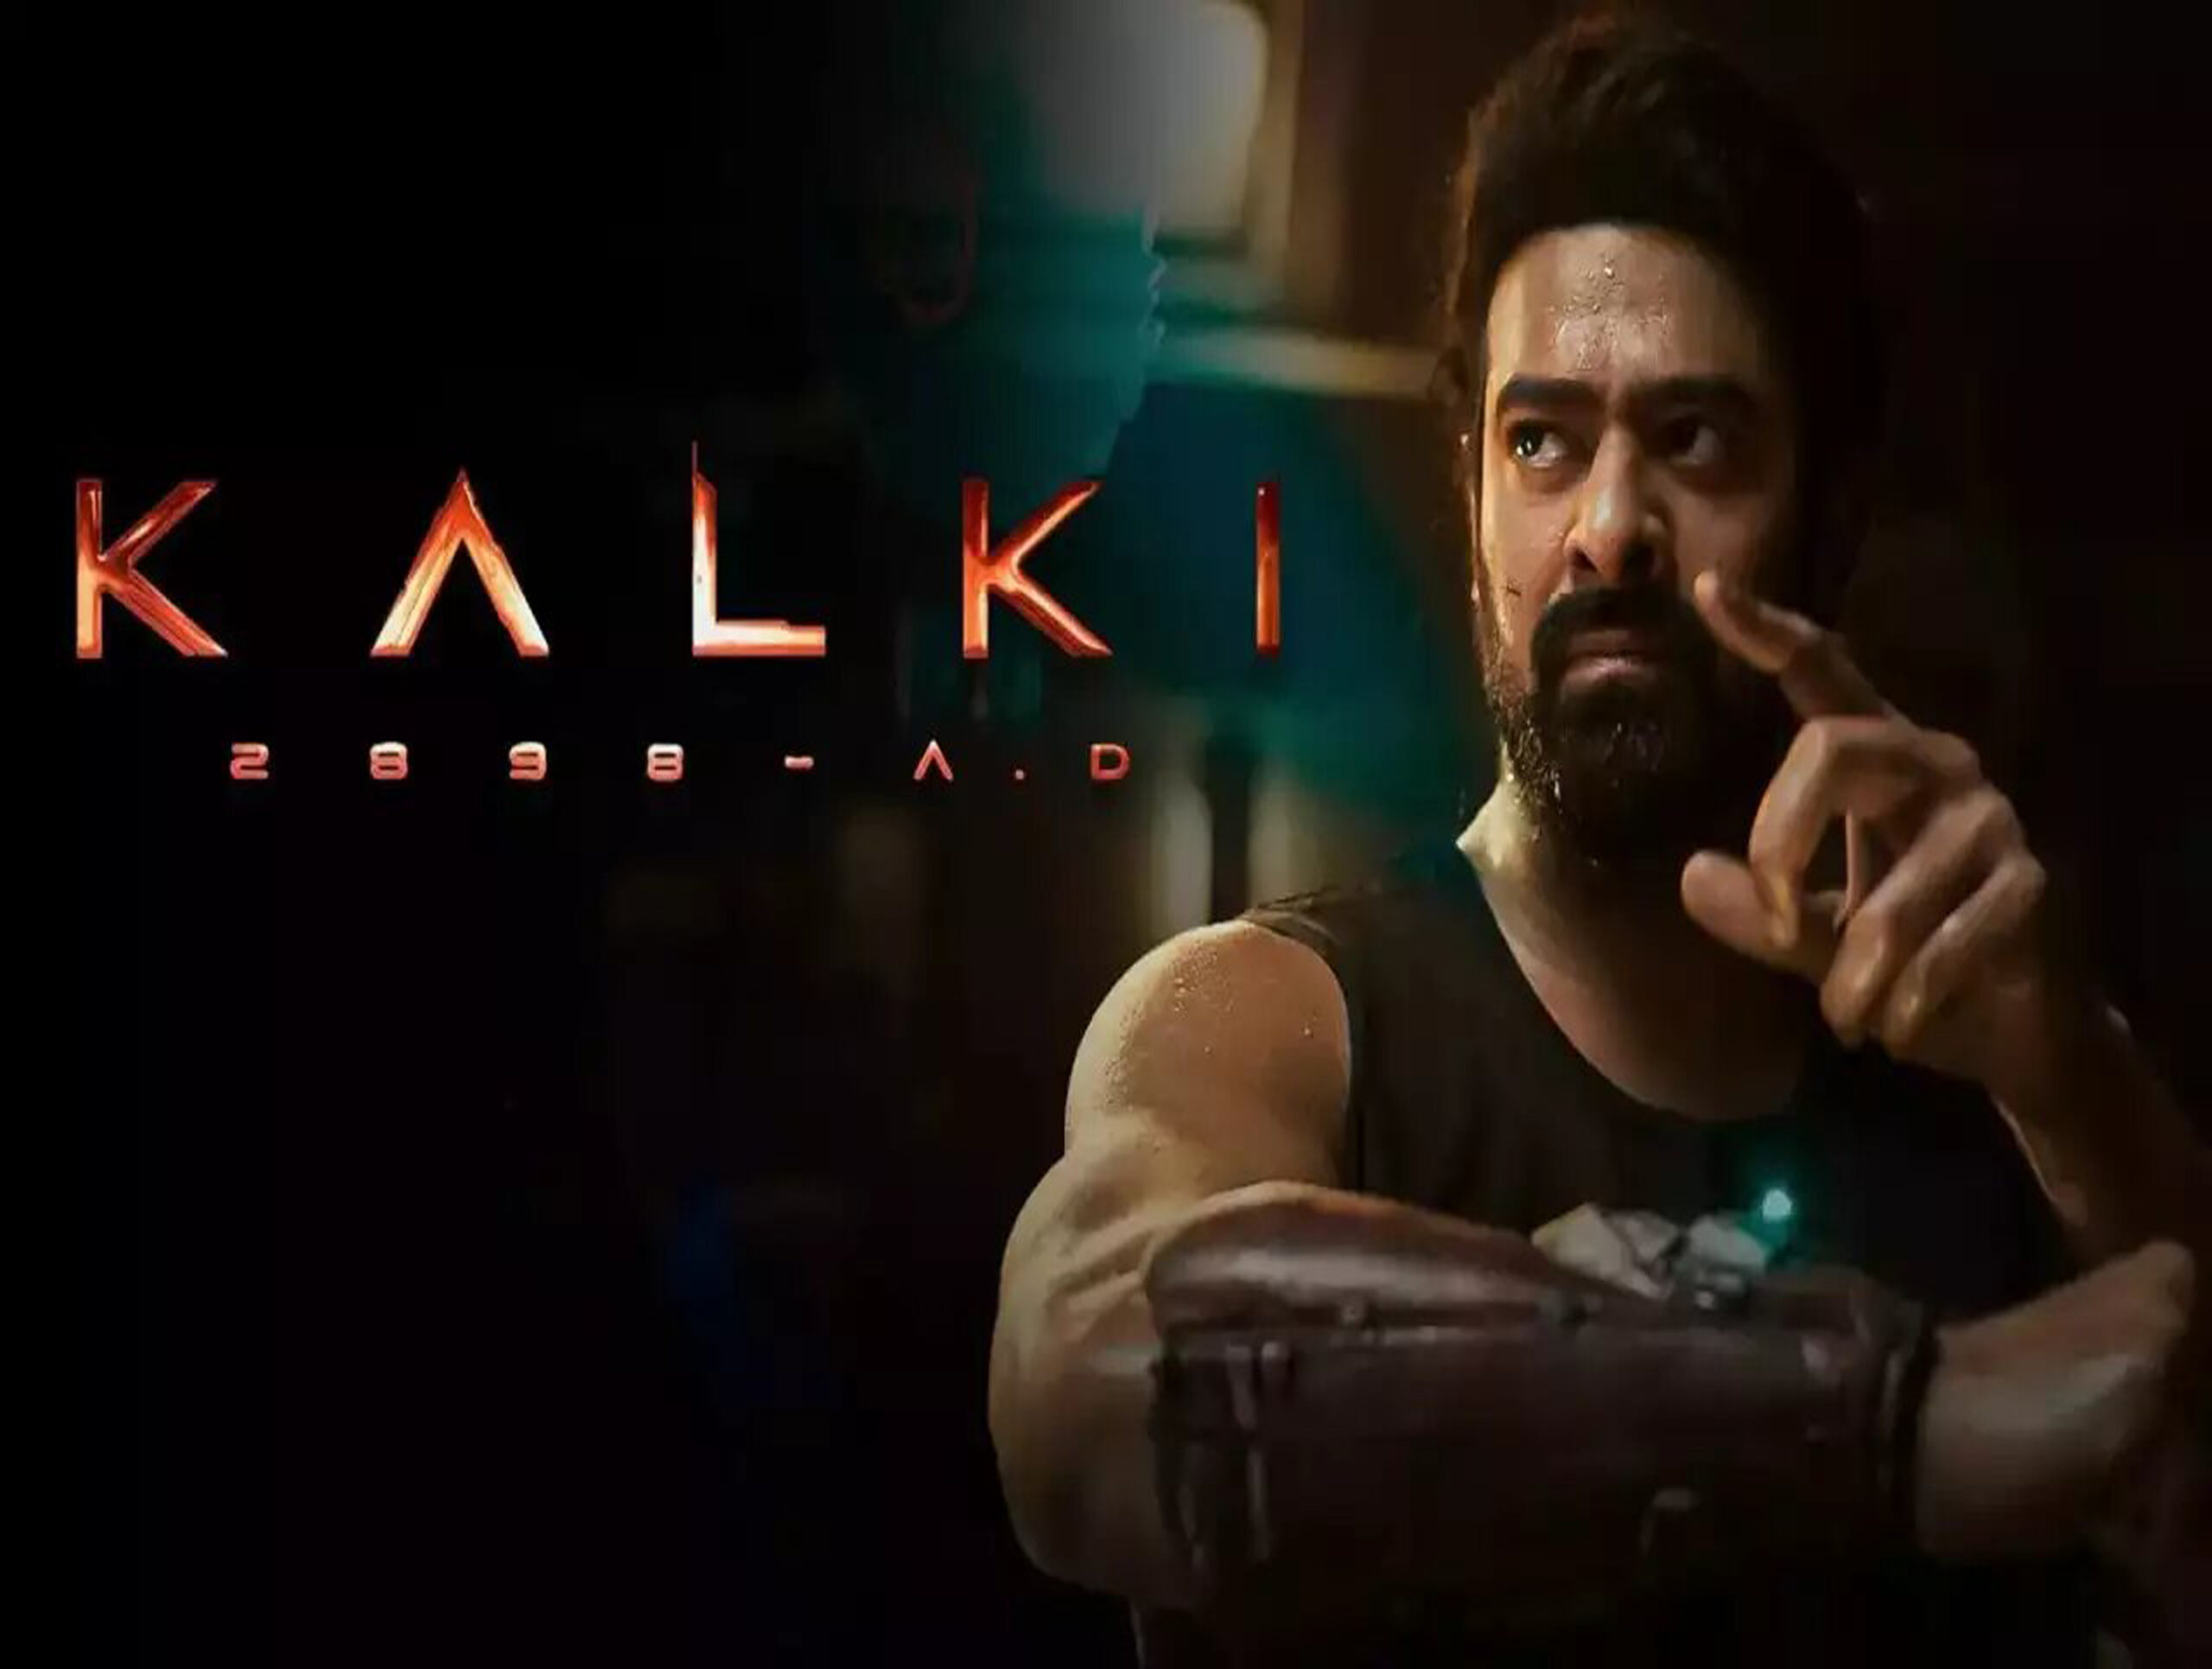 Kalki 2898 AD Release Date: Prabhas-Deepika Padukone’s film